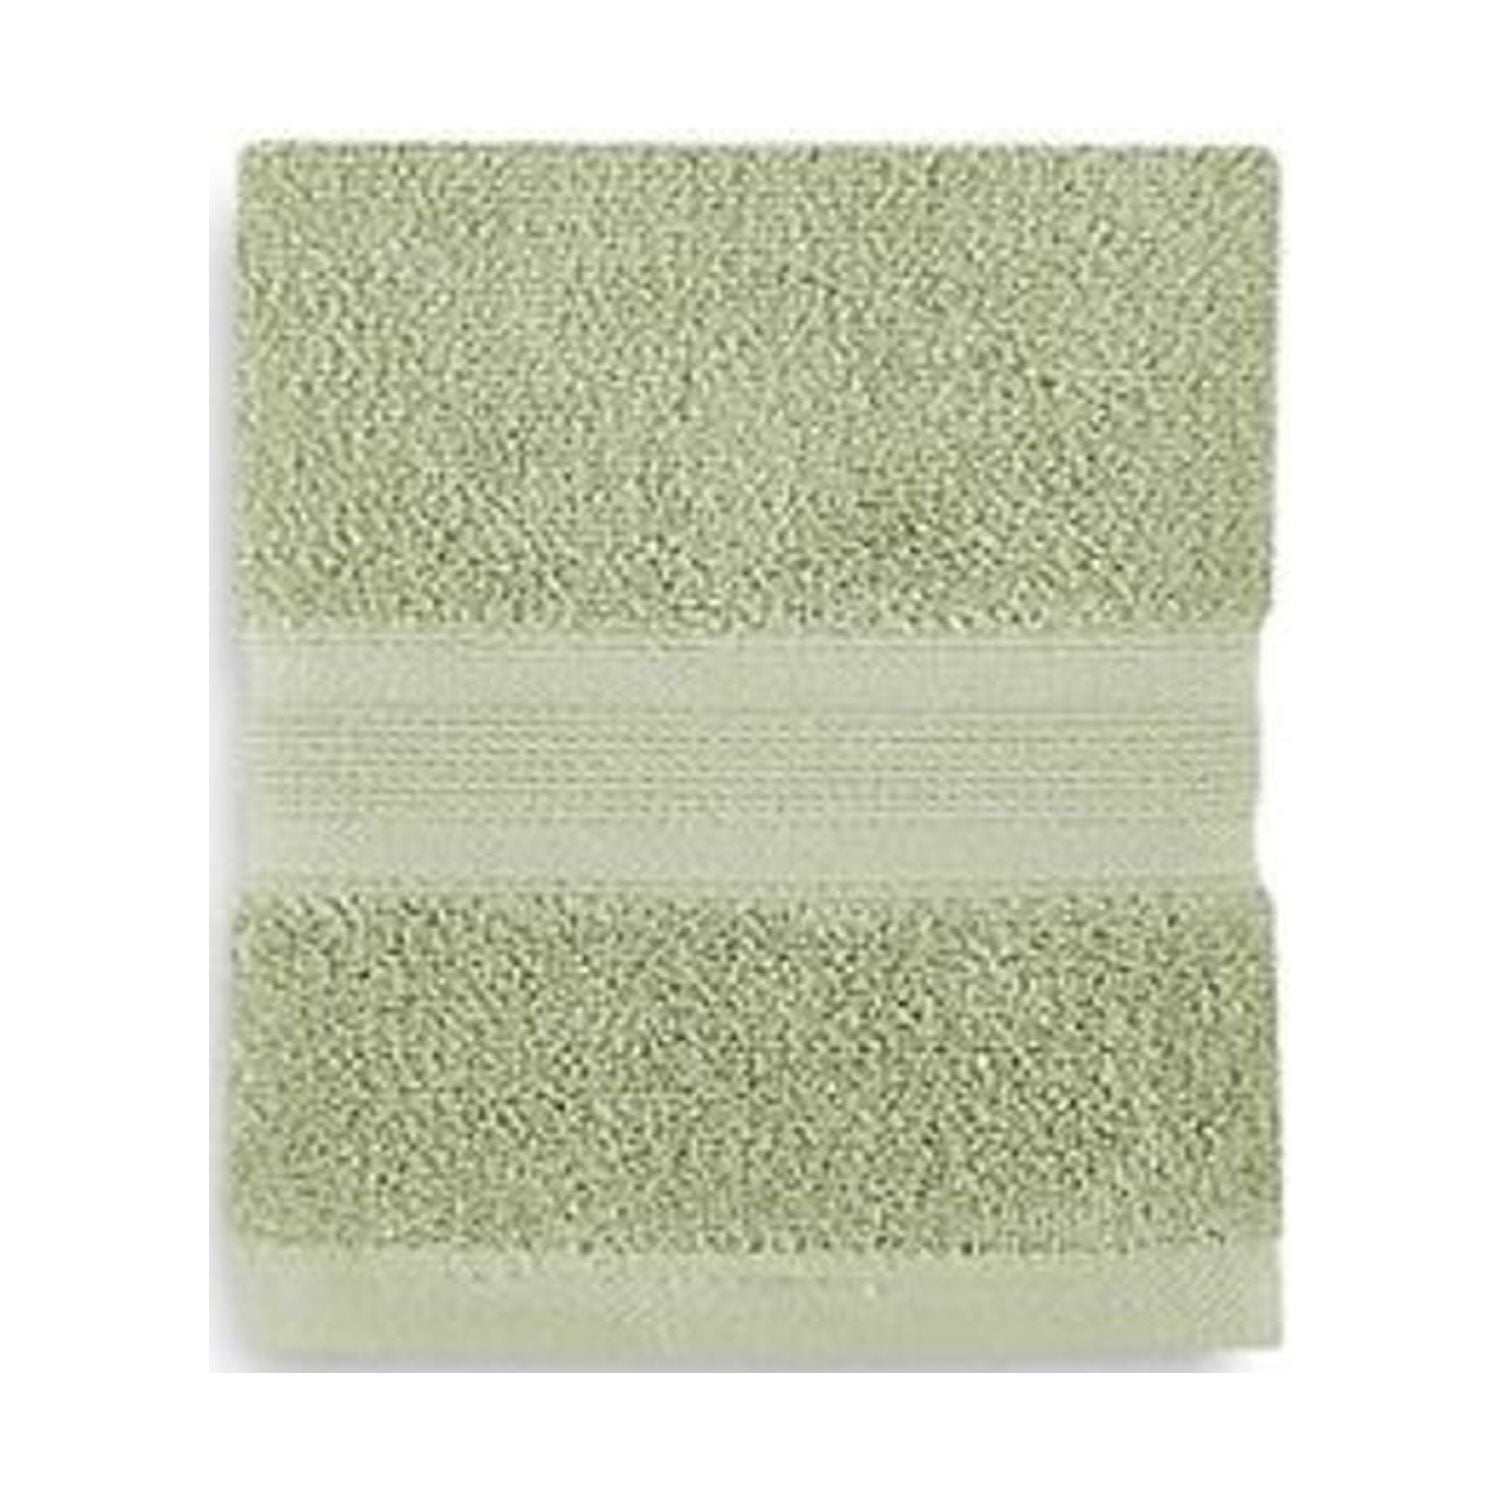 Vintage Wamsutta Bath Towel - 44x24 Green Floral - Made in USA